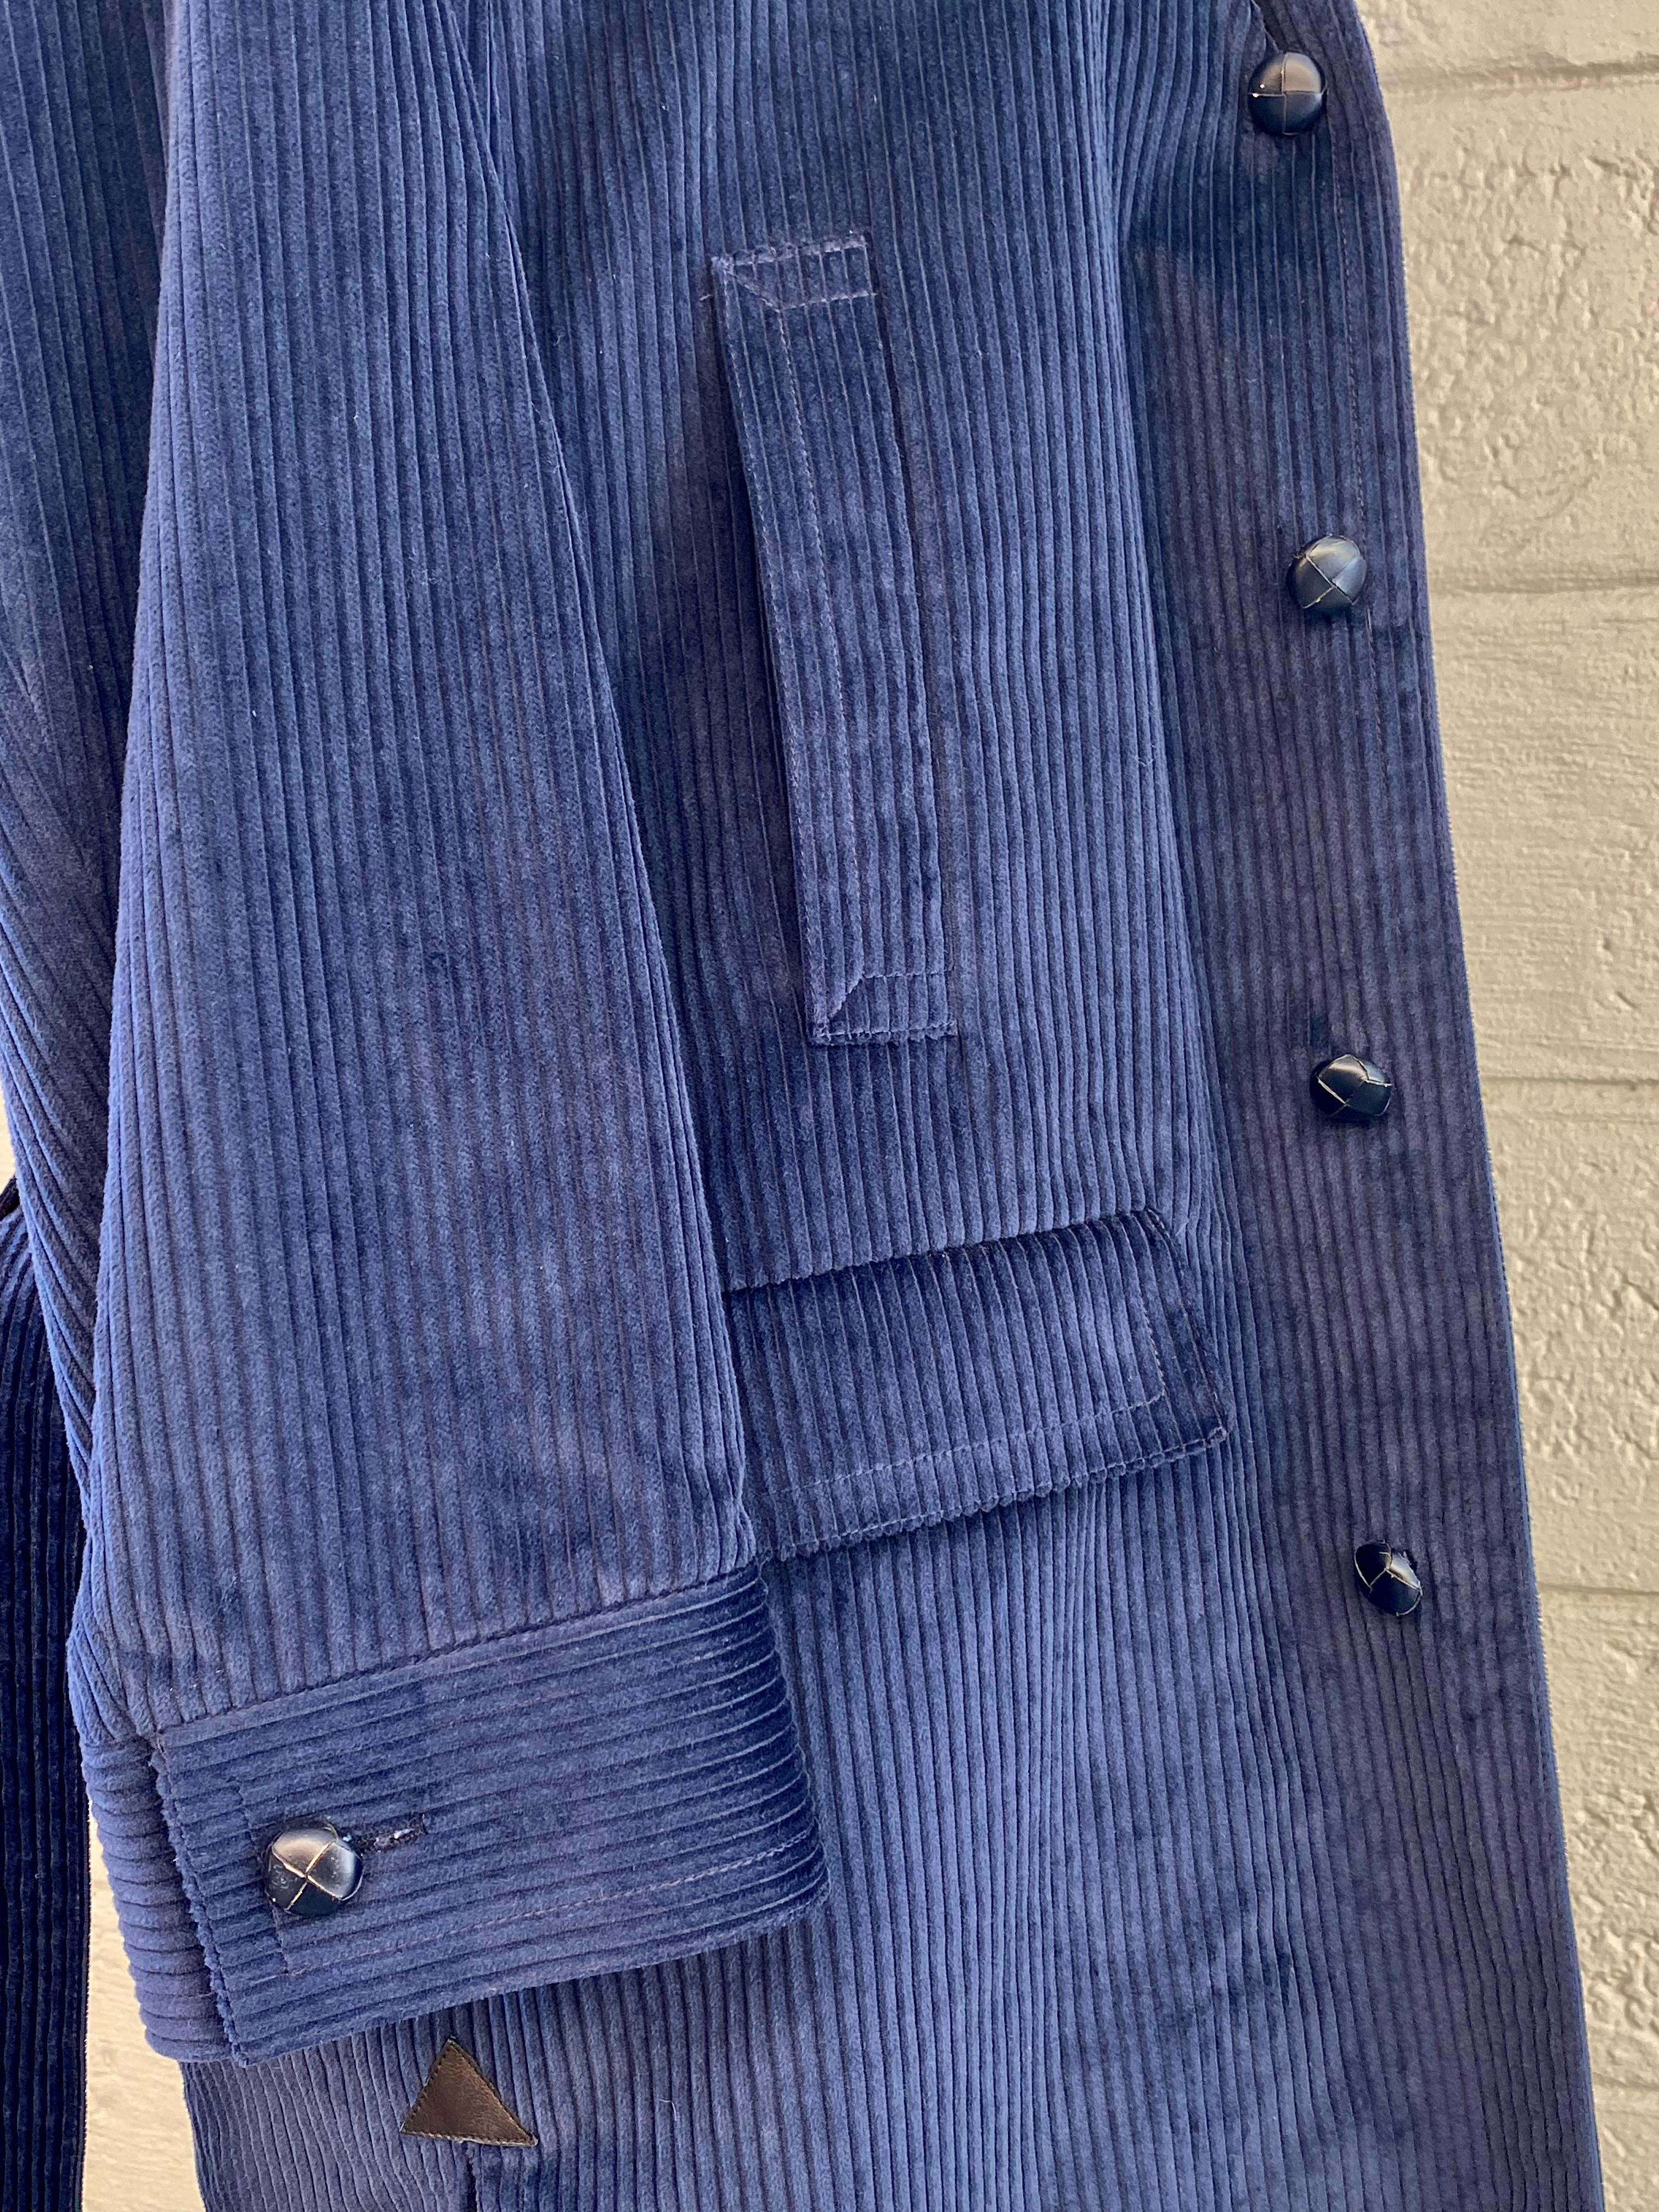 Vintage Rare Pierre Cardin Boutique Navy Blue Trench Coat  For Sale 1